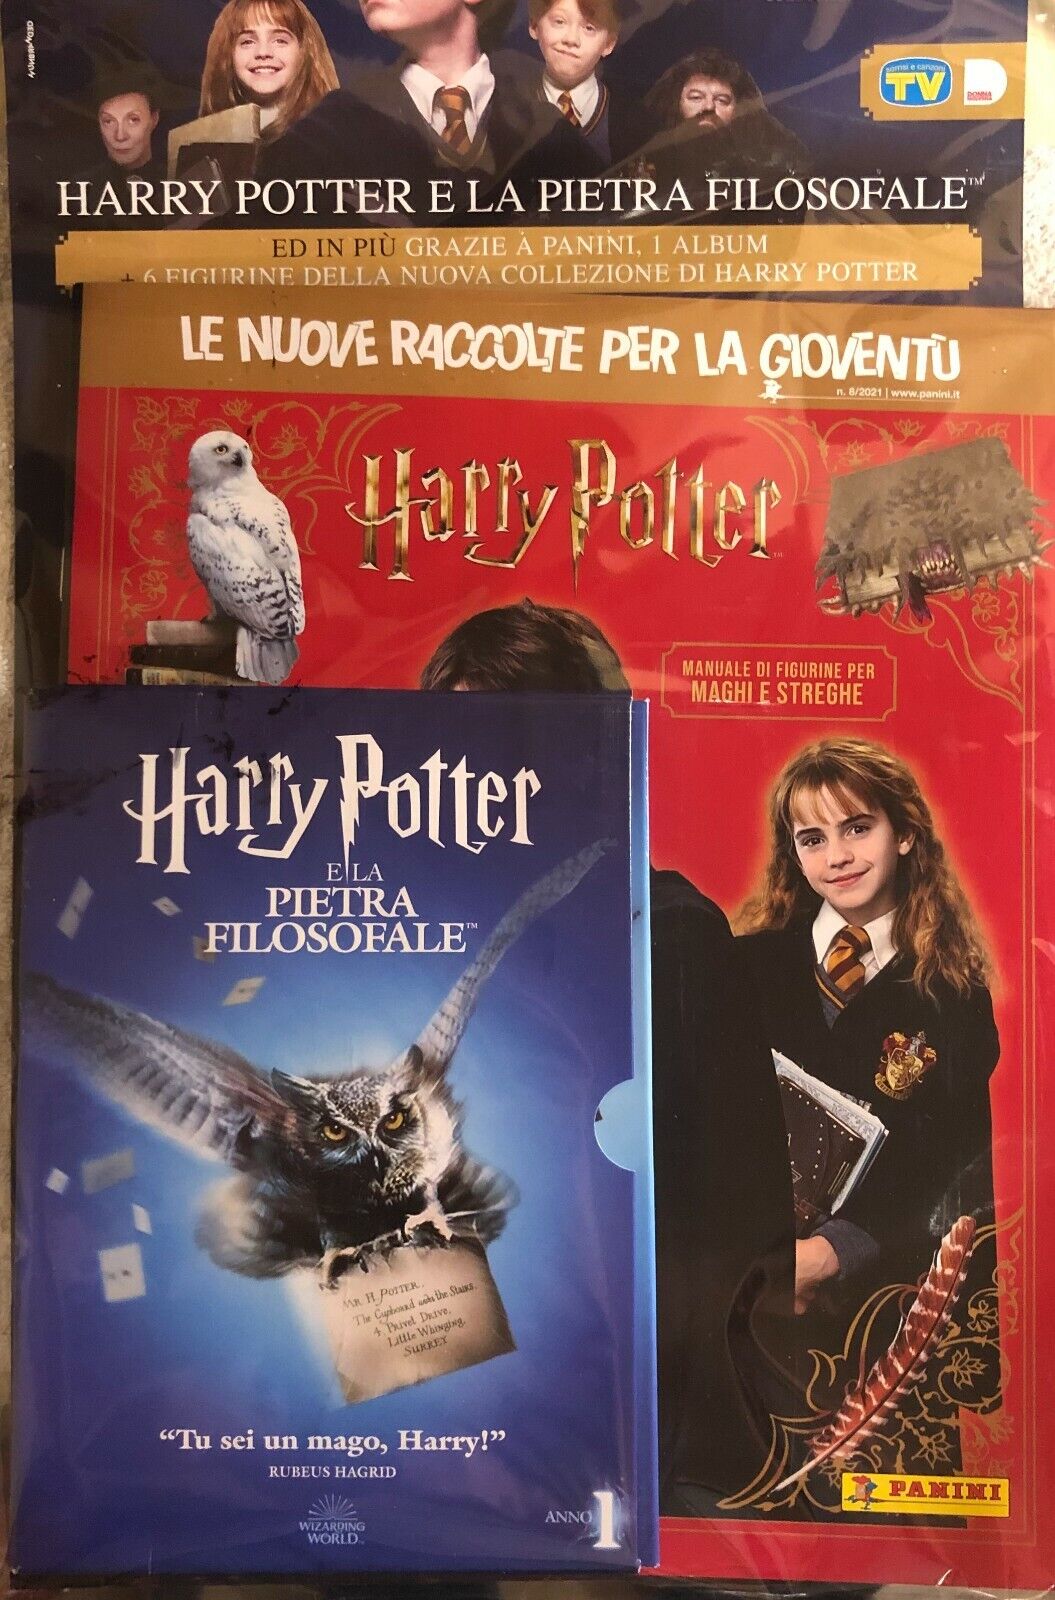 Harry Potter e la Pietra Filosofale DVD+Album figurine Harry Potter di Chris Col